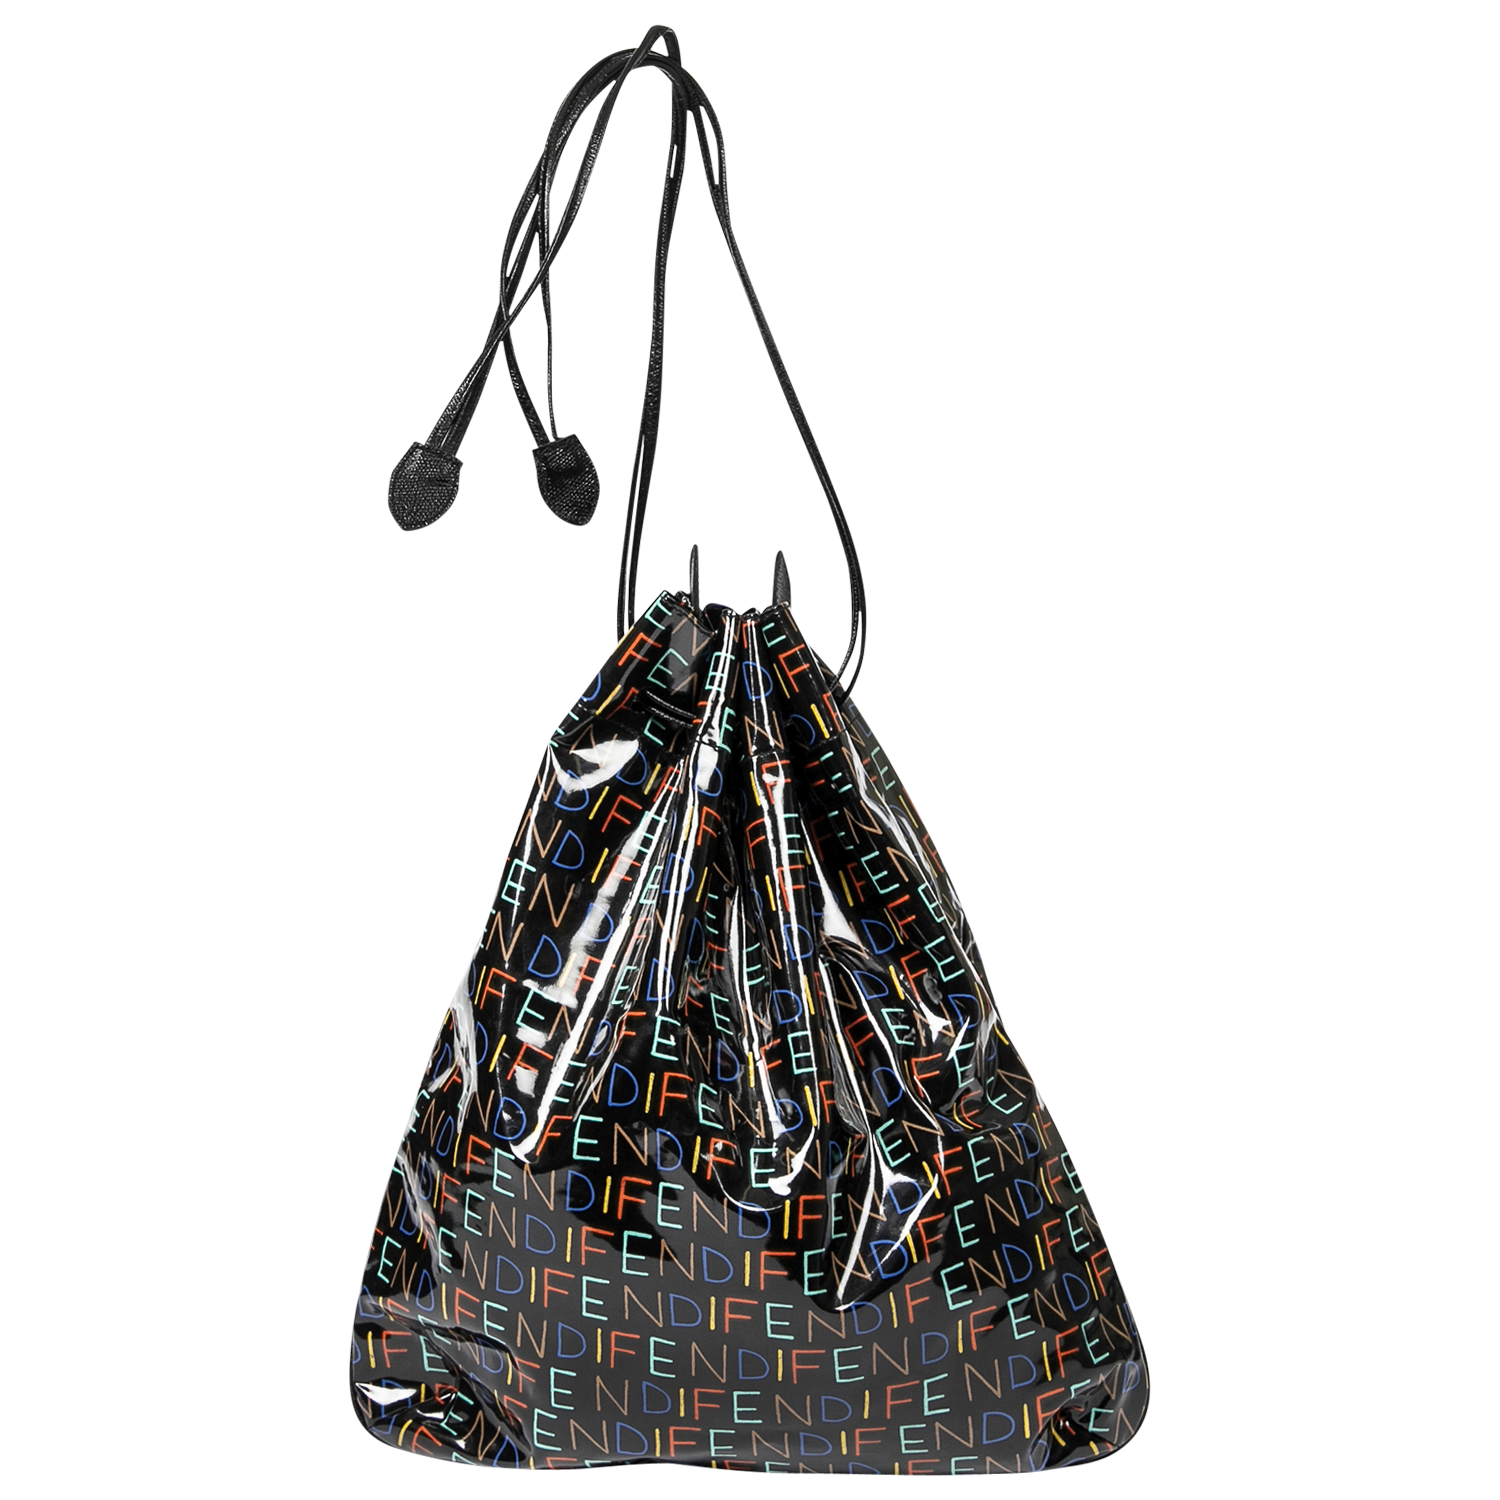 Fendi Multicolor Drawstring Bag